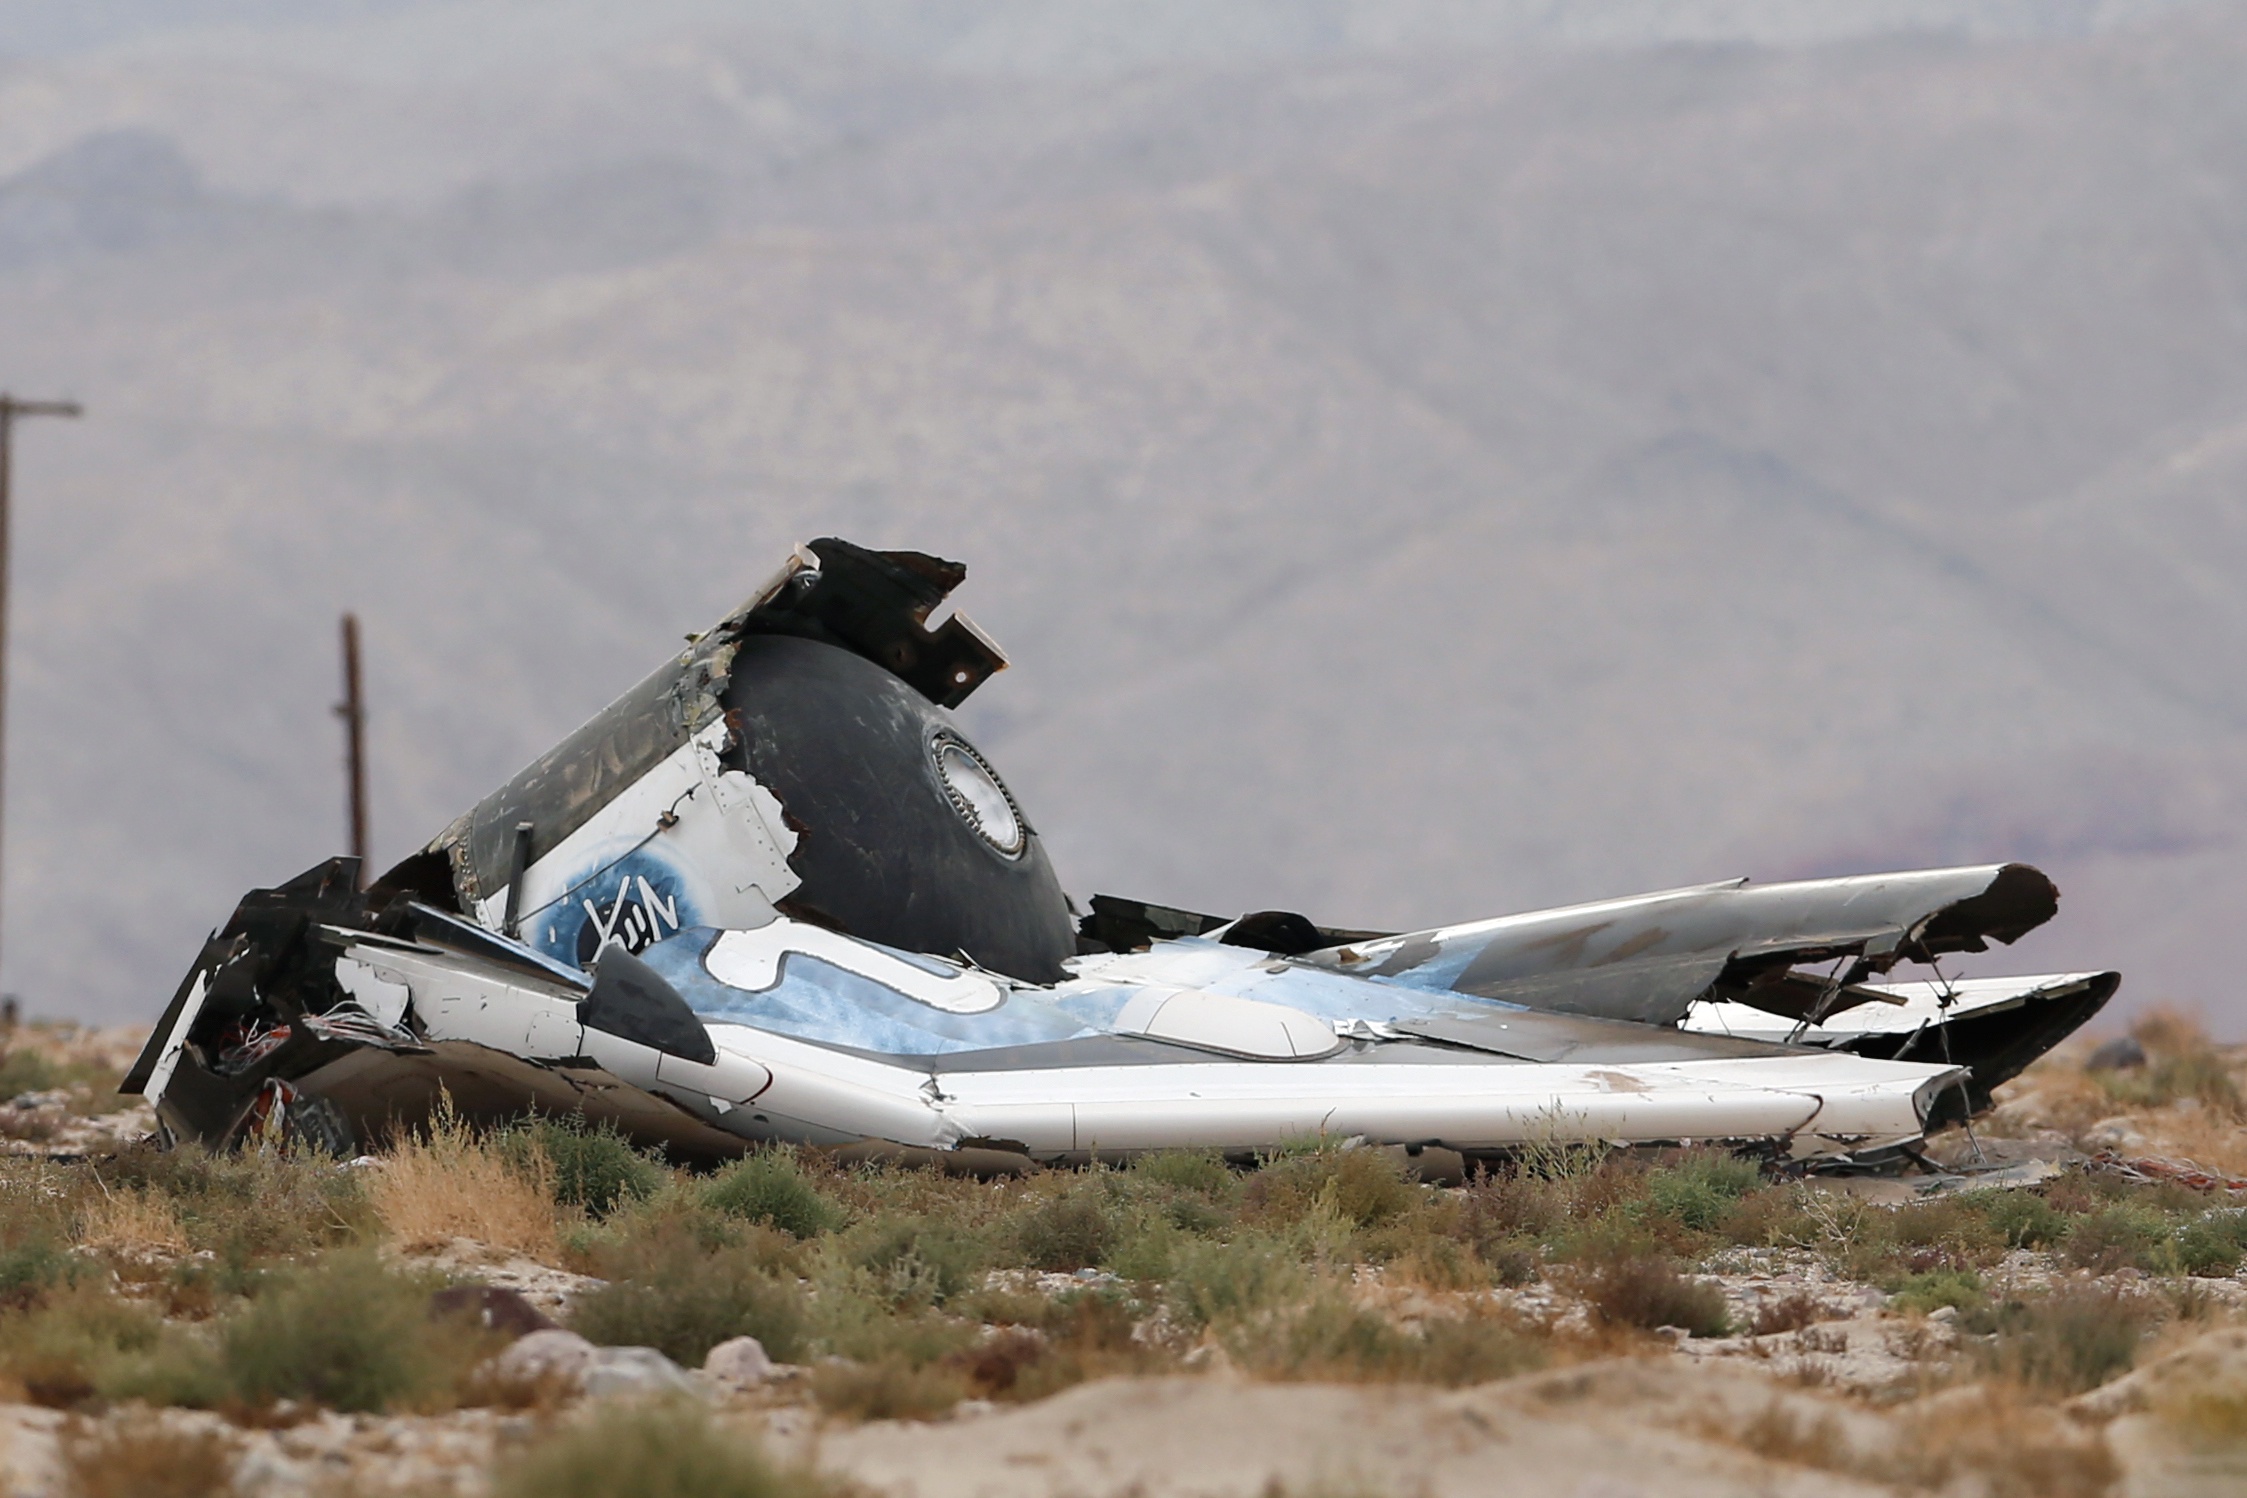 Test flight of Virgin Galactic spaceship ends in fatal crash in California